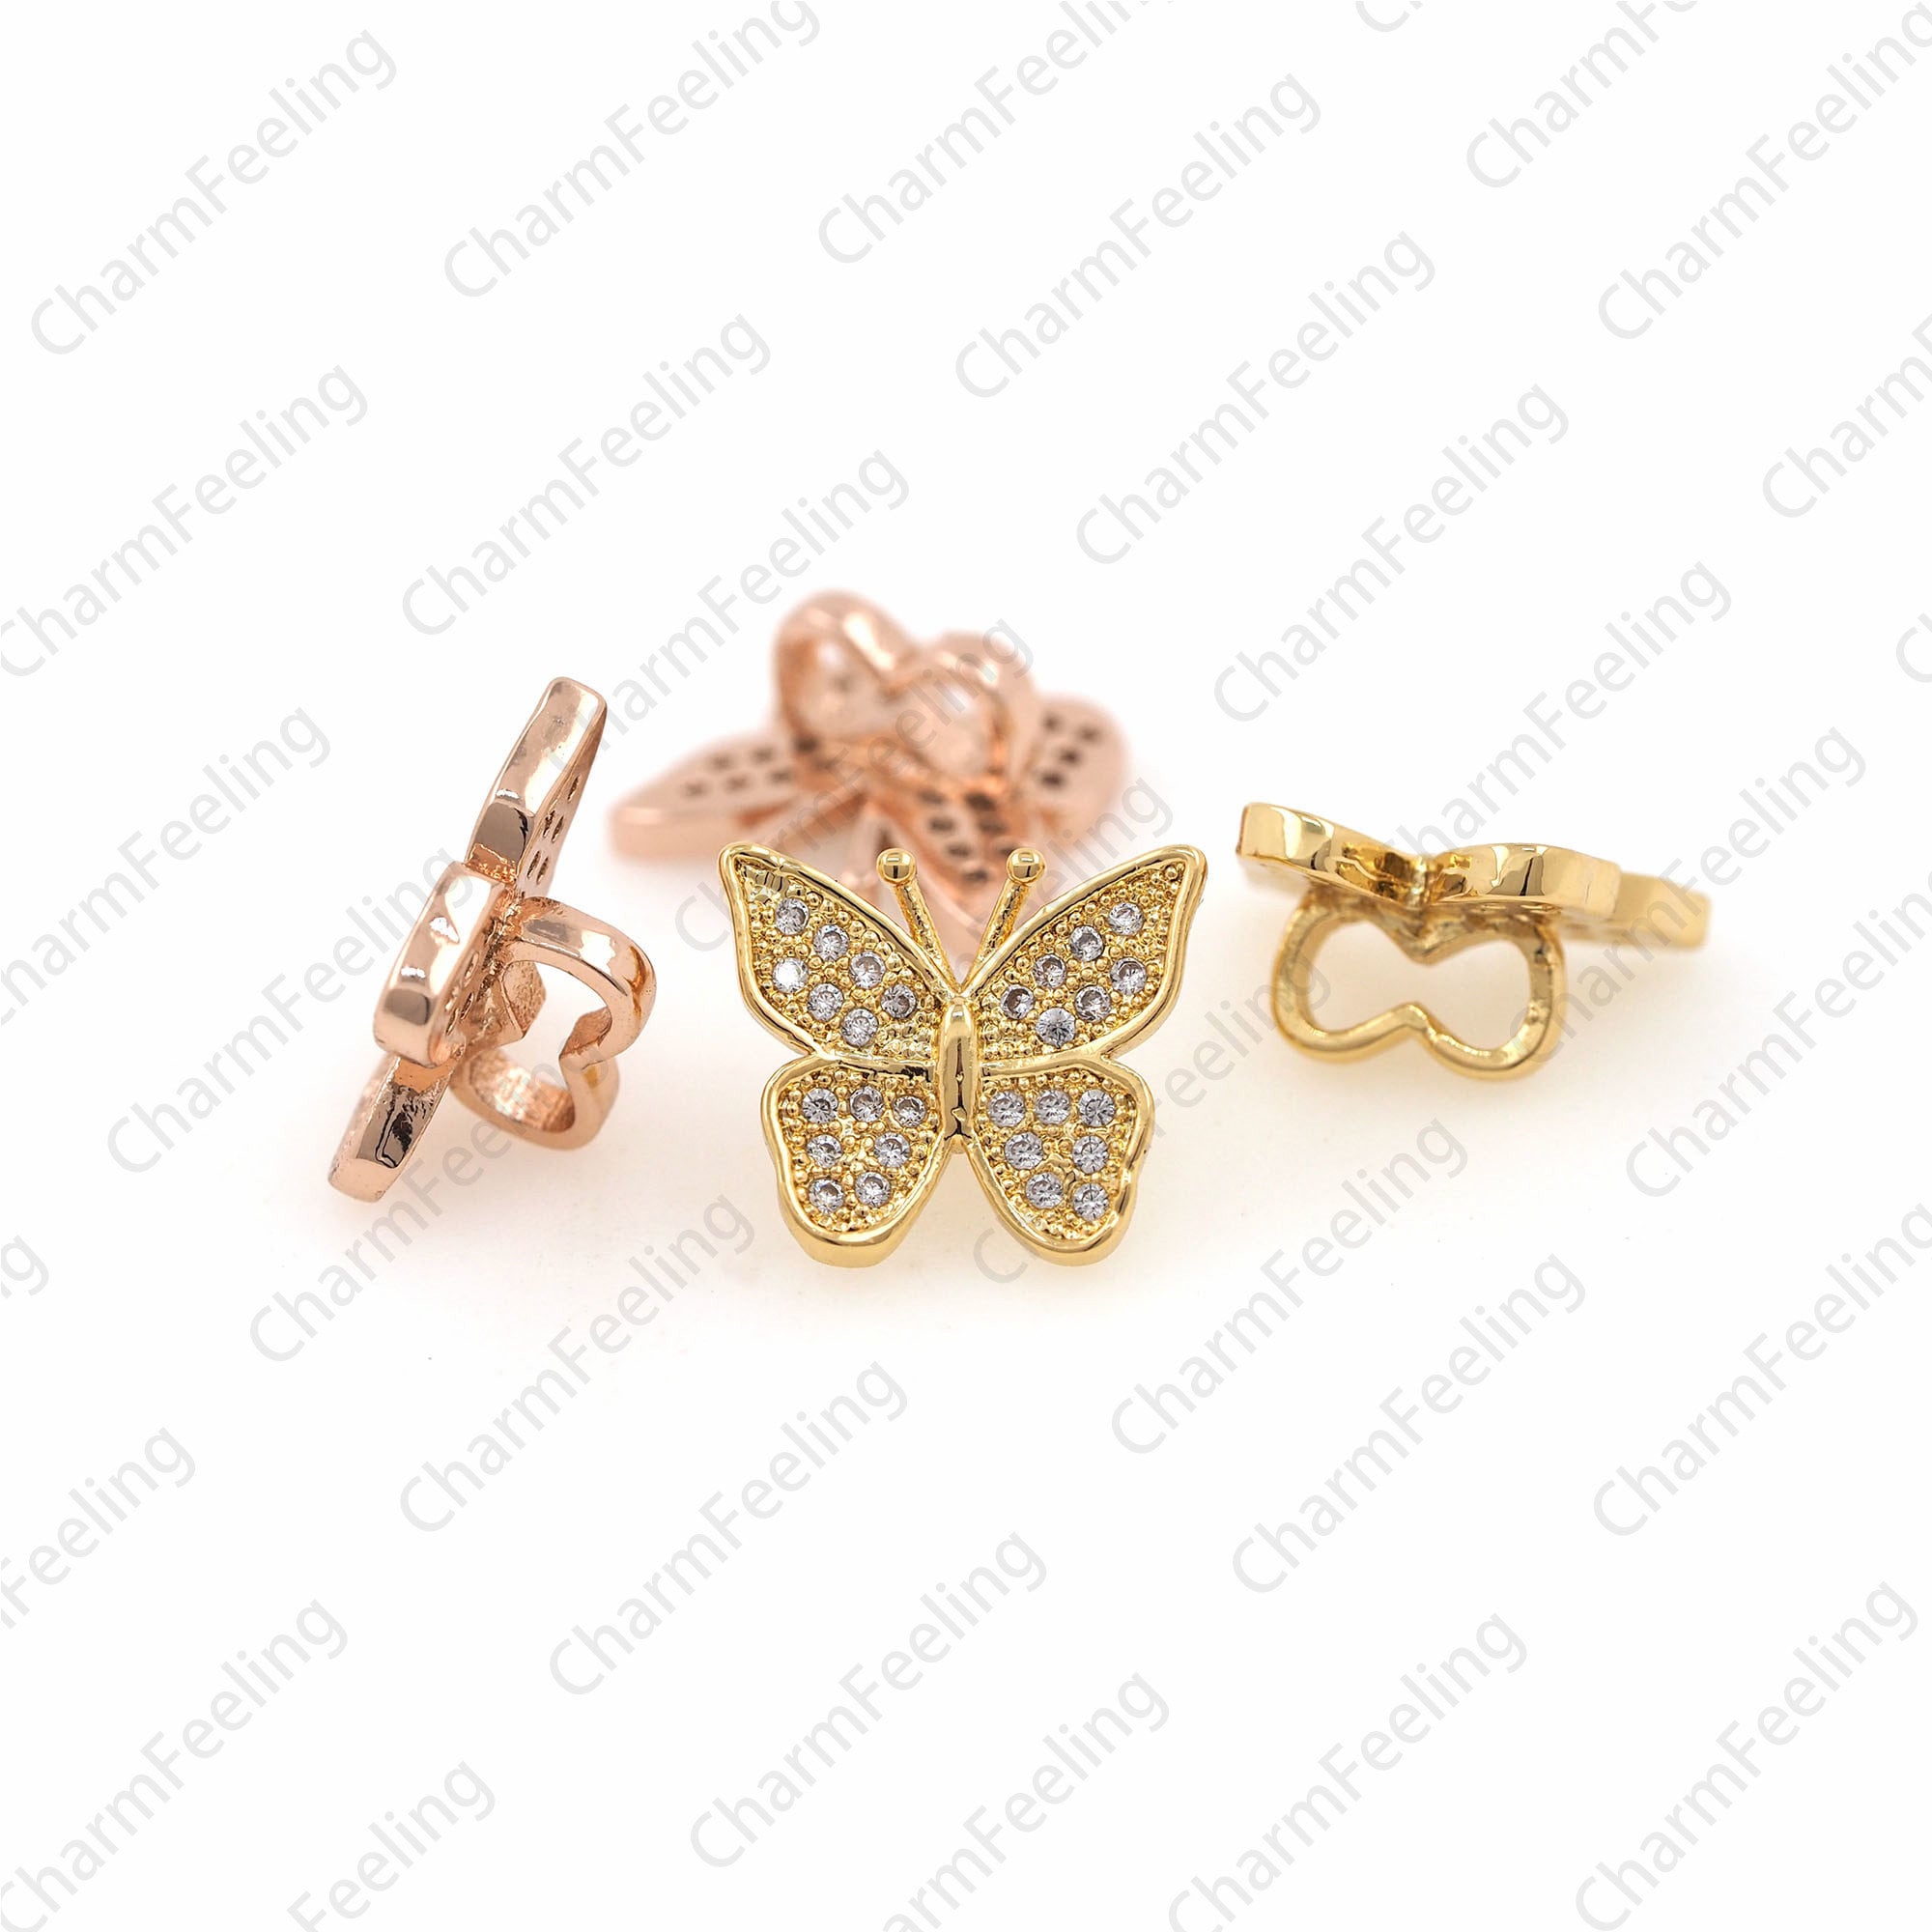 Micro Pave Butterfly Bead, Insect Beads, Cz Butterfly Necklace Bracelet Pendants 12 10.3 5.8mm Hole3.3mm 1Pcs